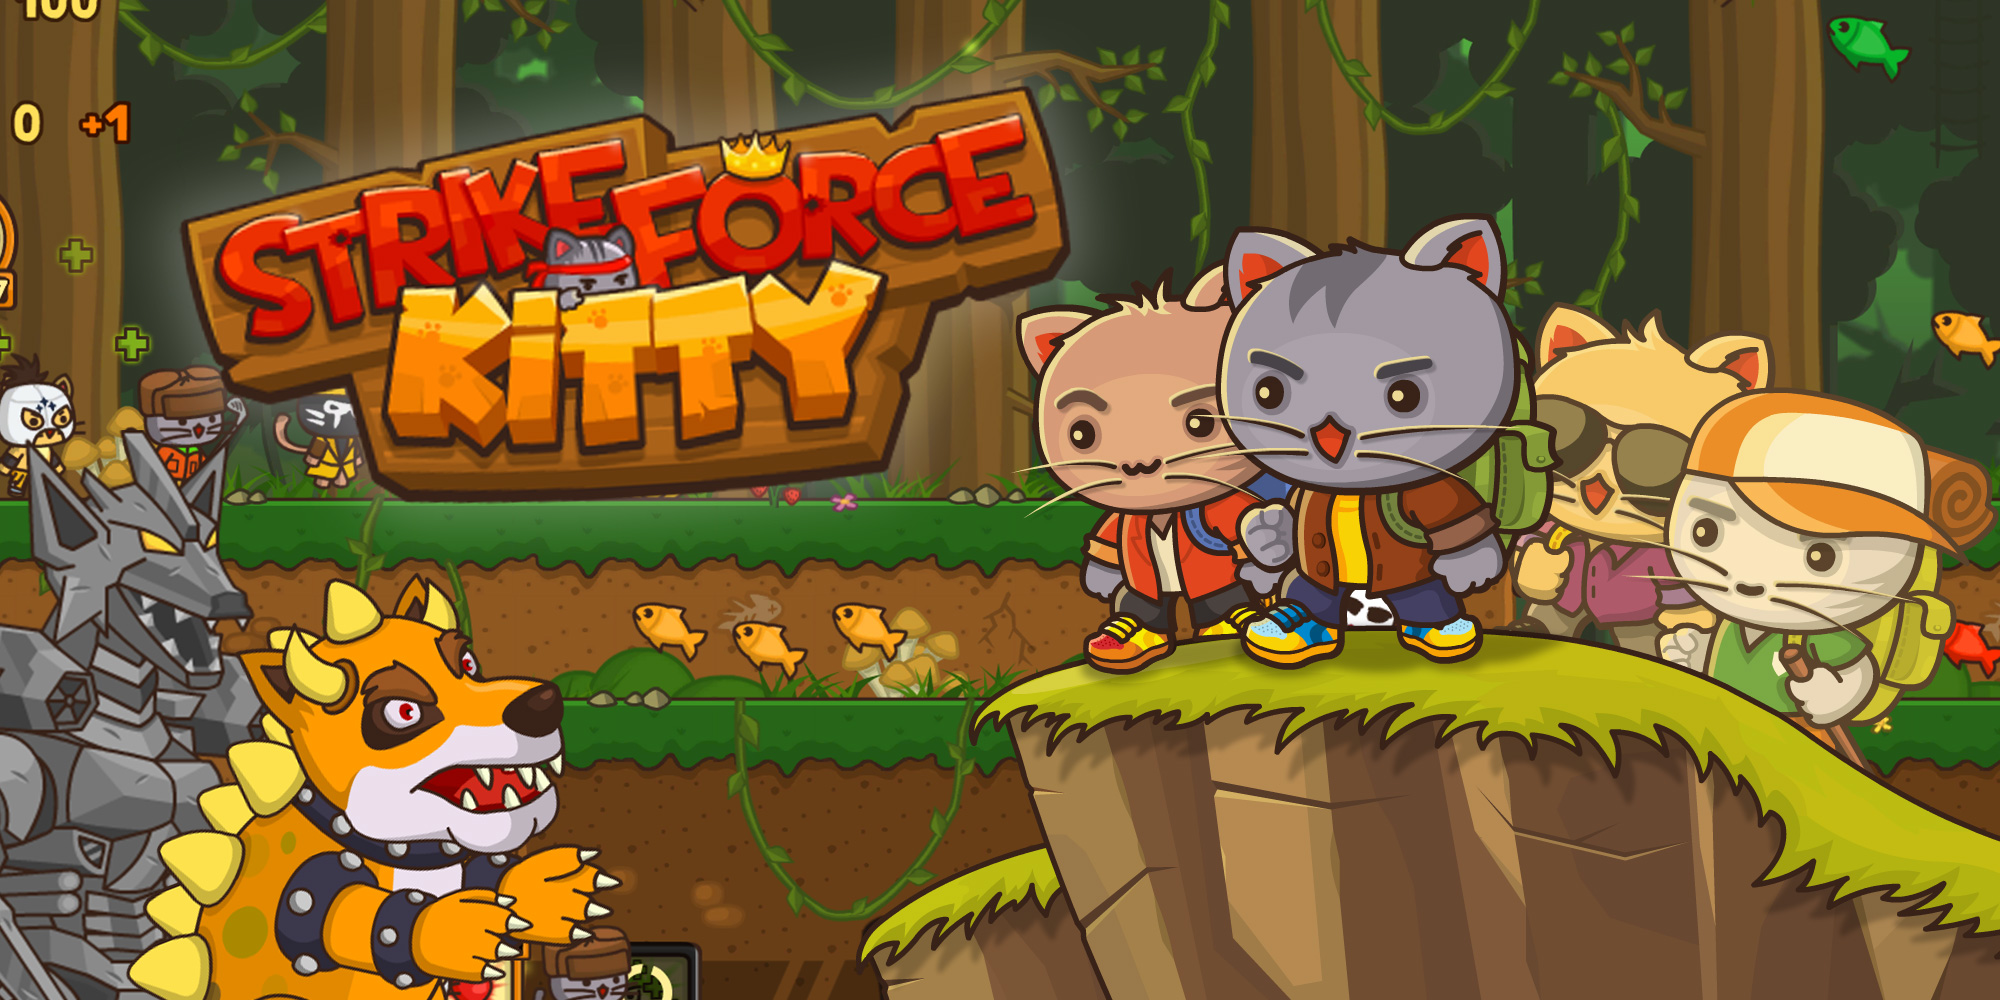 Kitty Strike Force 